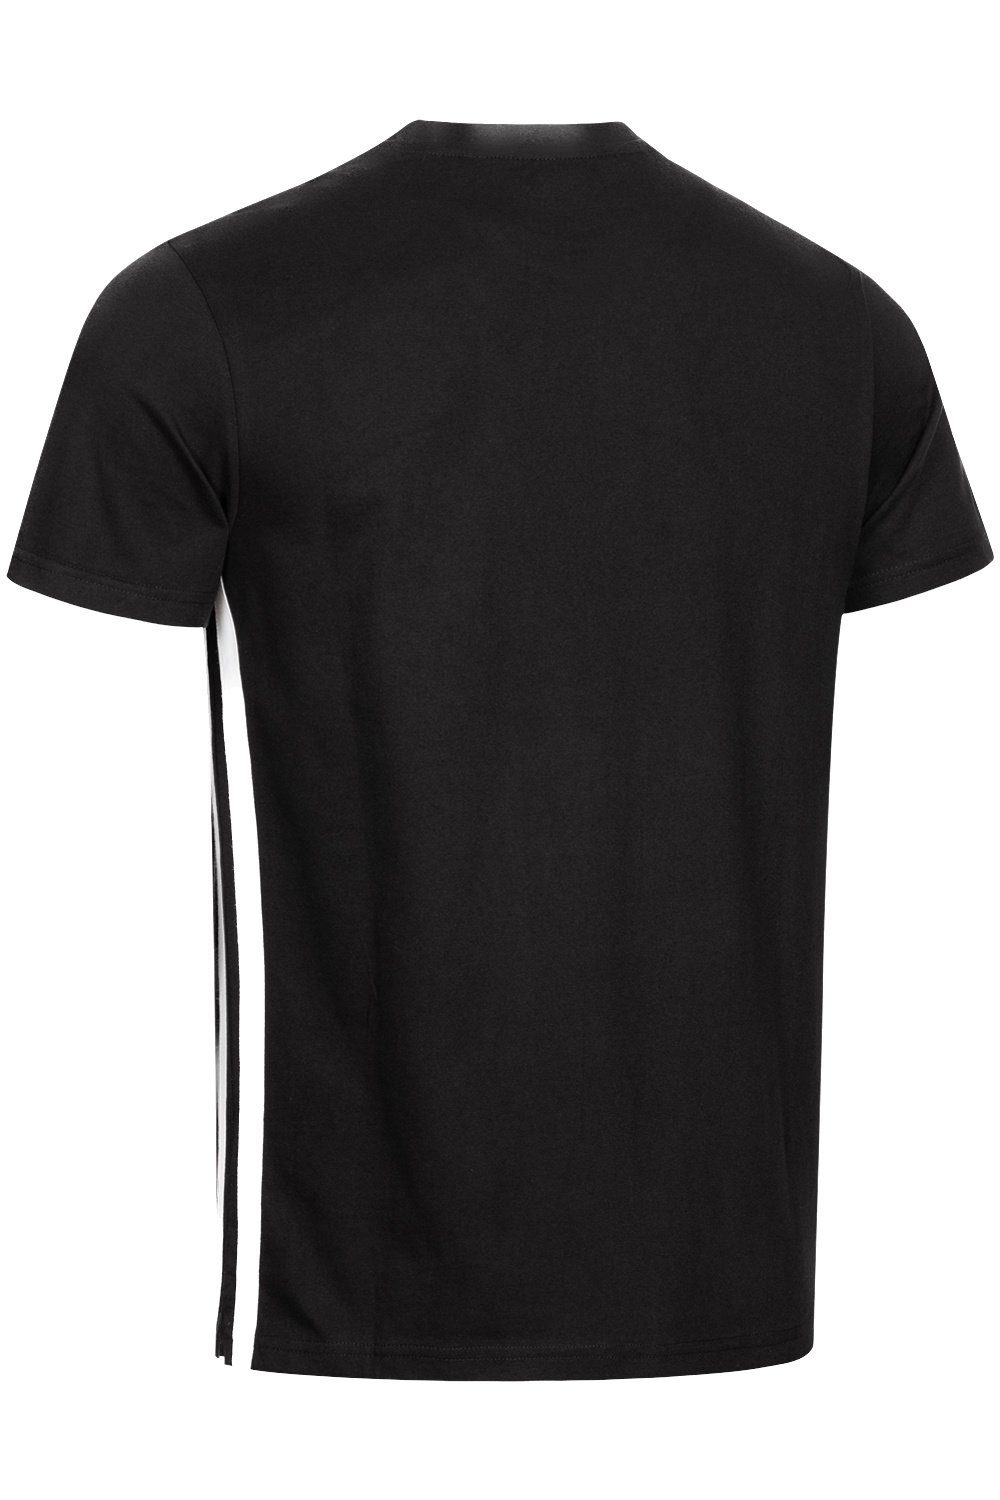 SHEGRA Lonsdale Herren Lonsdale T-Shirt black/white T-Shirt Adult